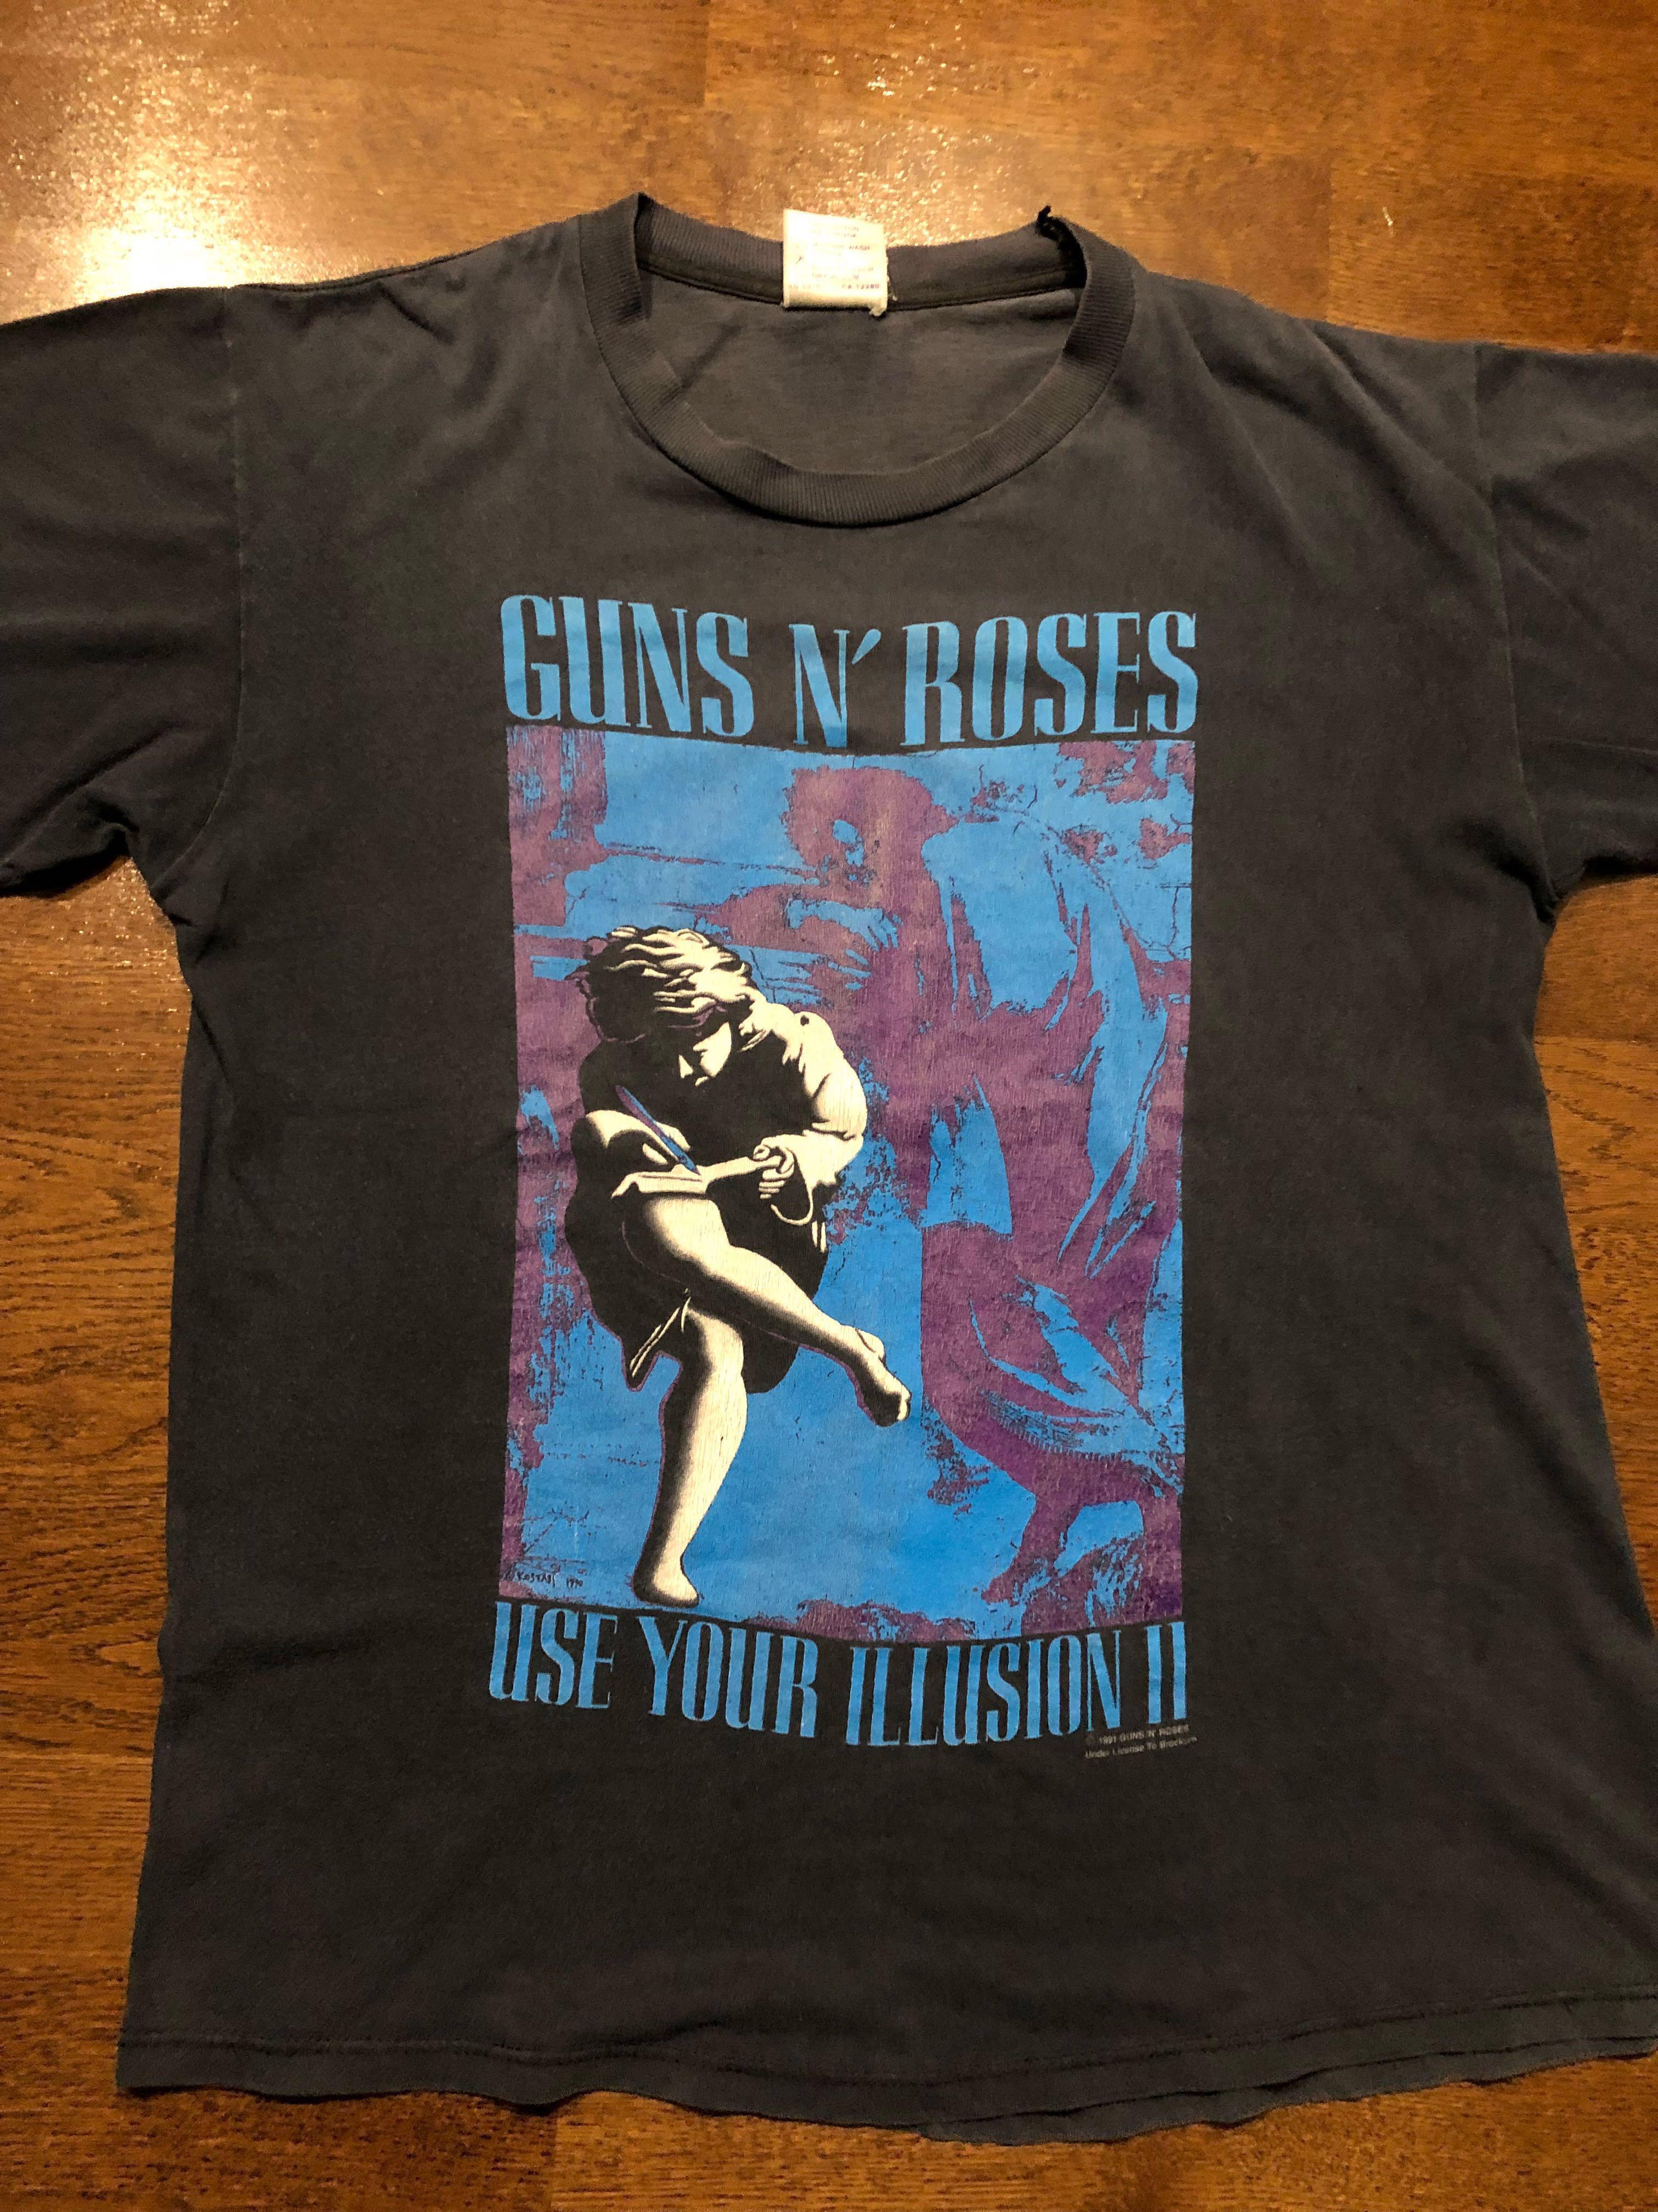 Kleding Herenkleding Overhemden & T-shirts T-shirts T-shirts met print Vintage Guns N' Roses Use Your Illusion 1992 